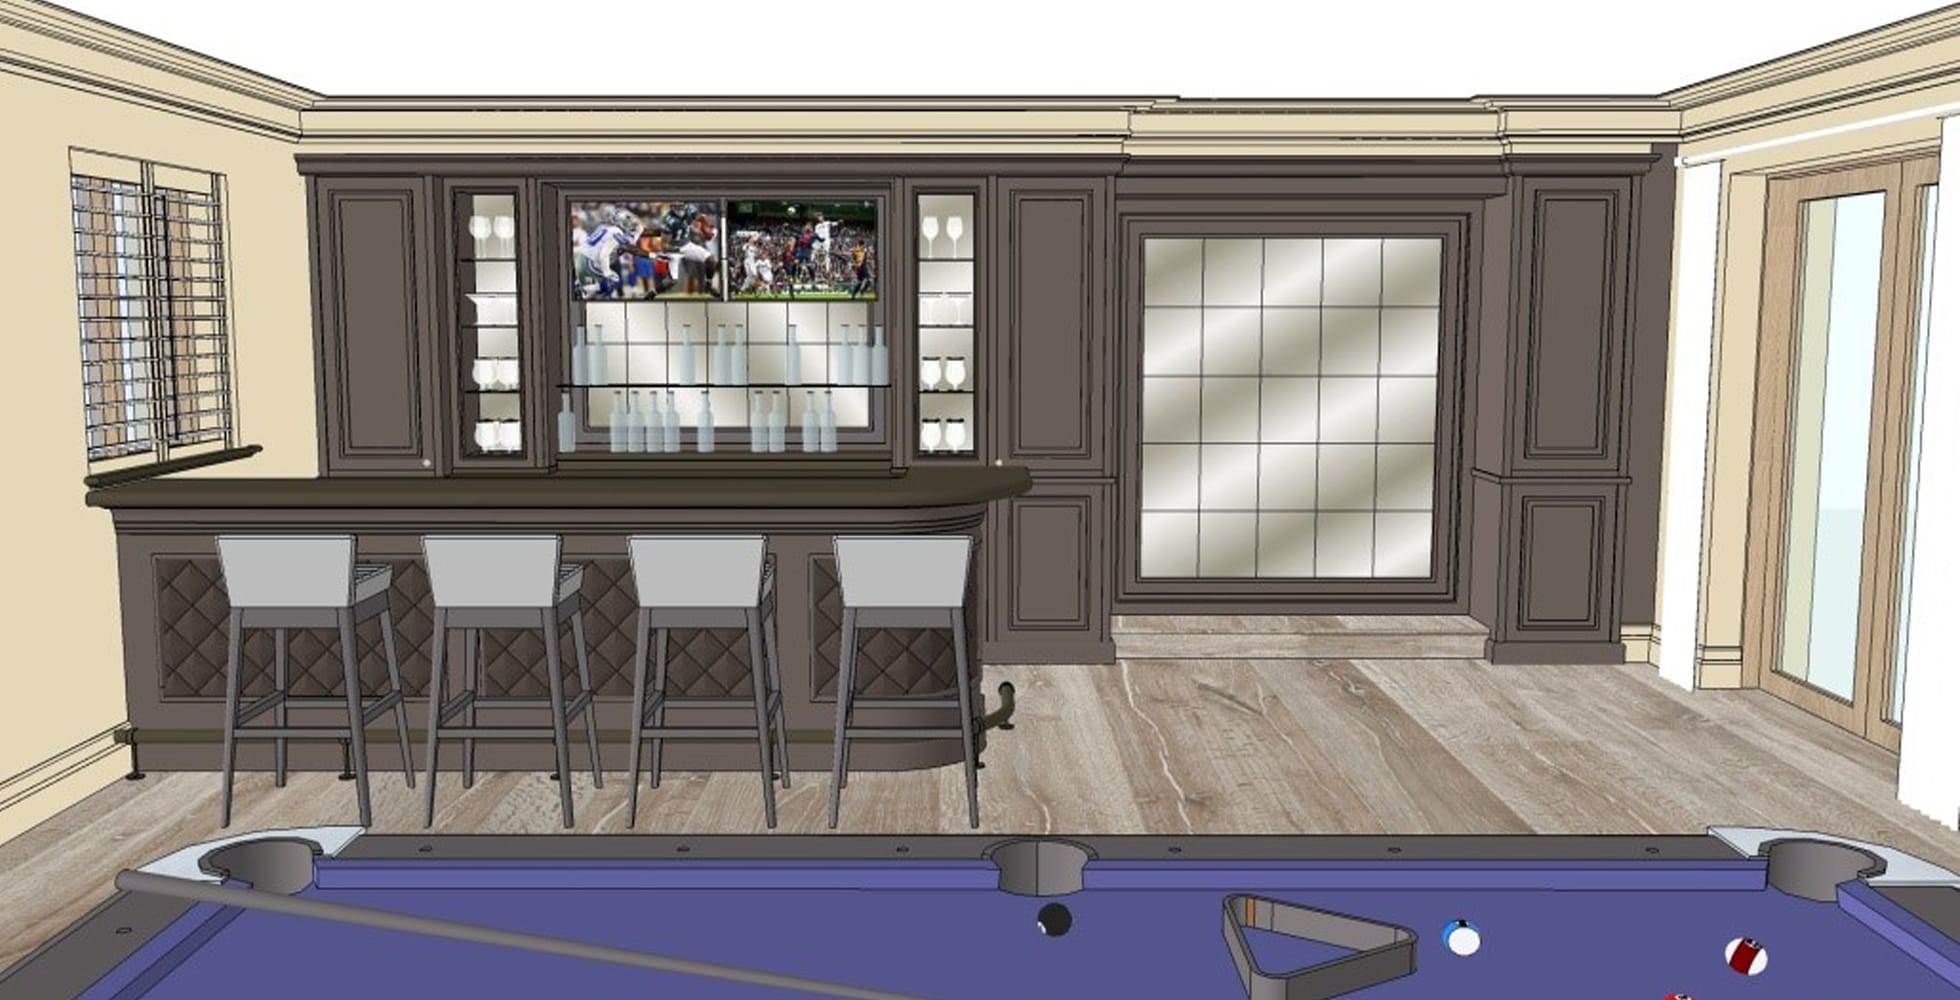 Sketch up image of bespoke bar